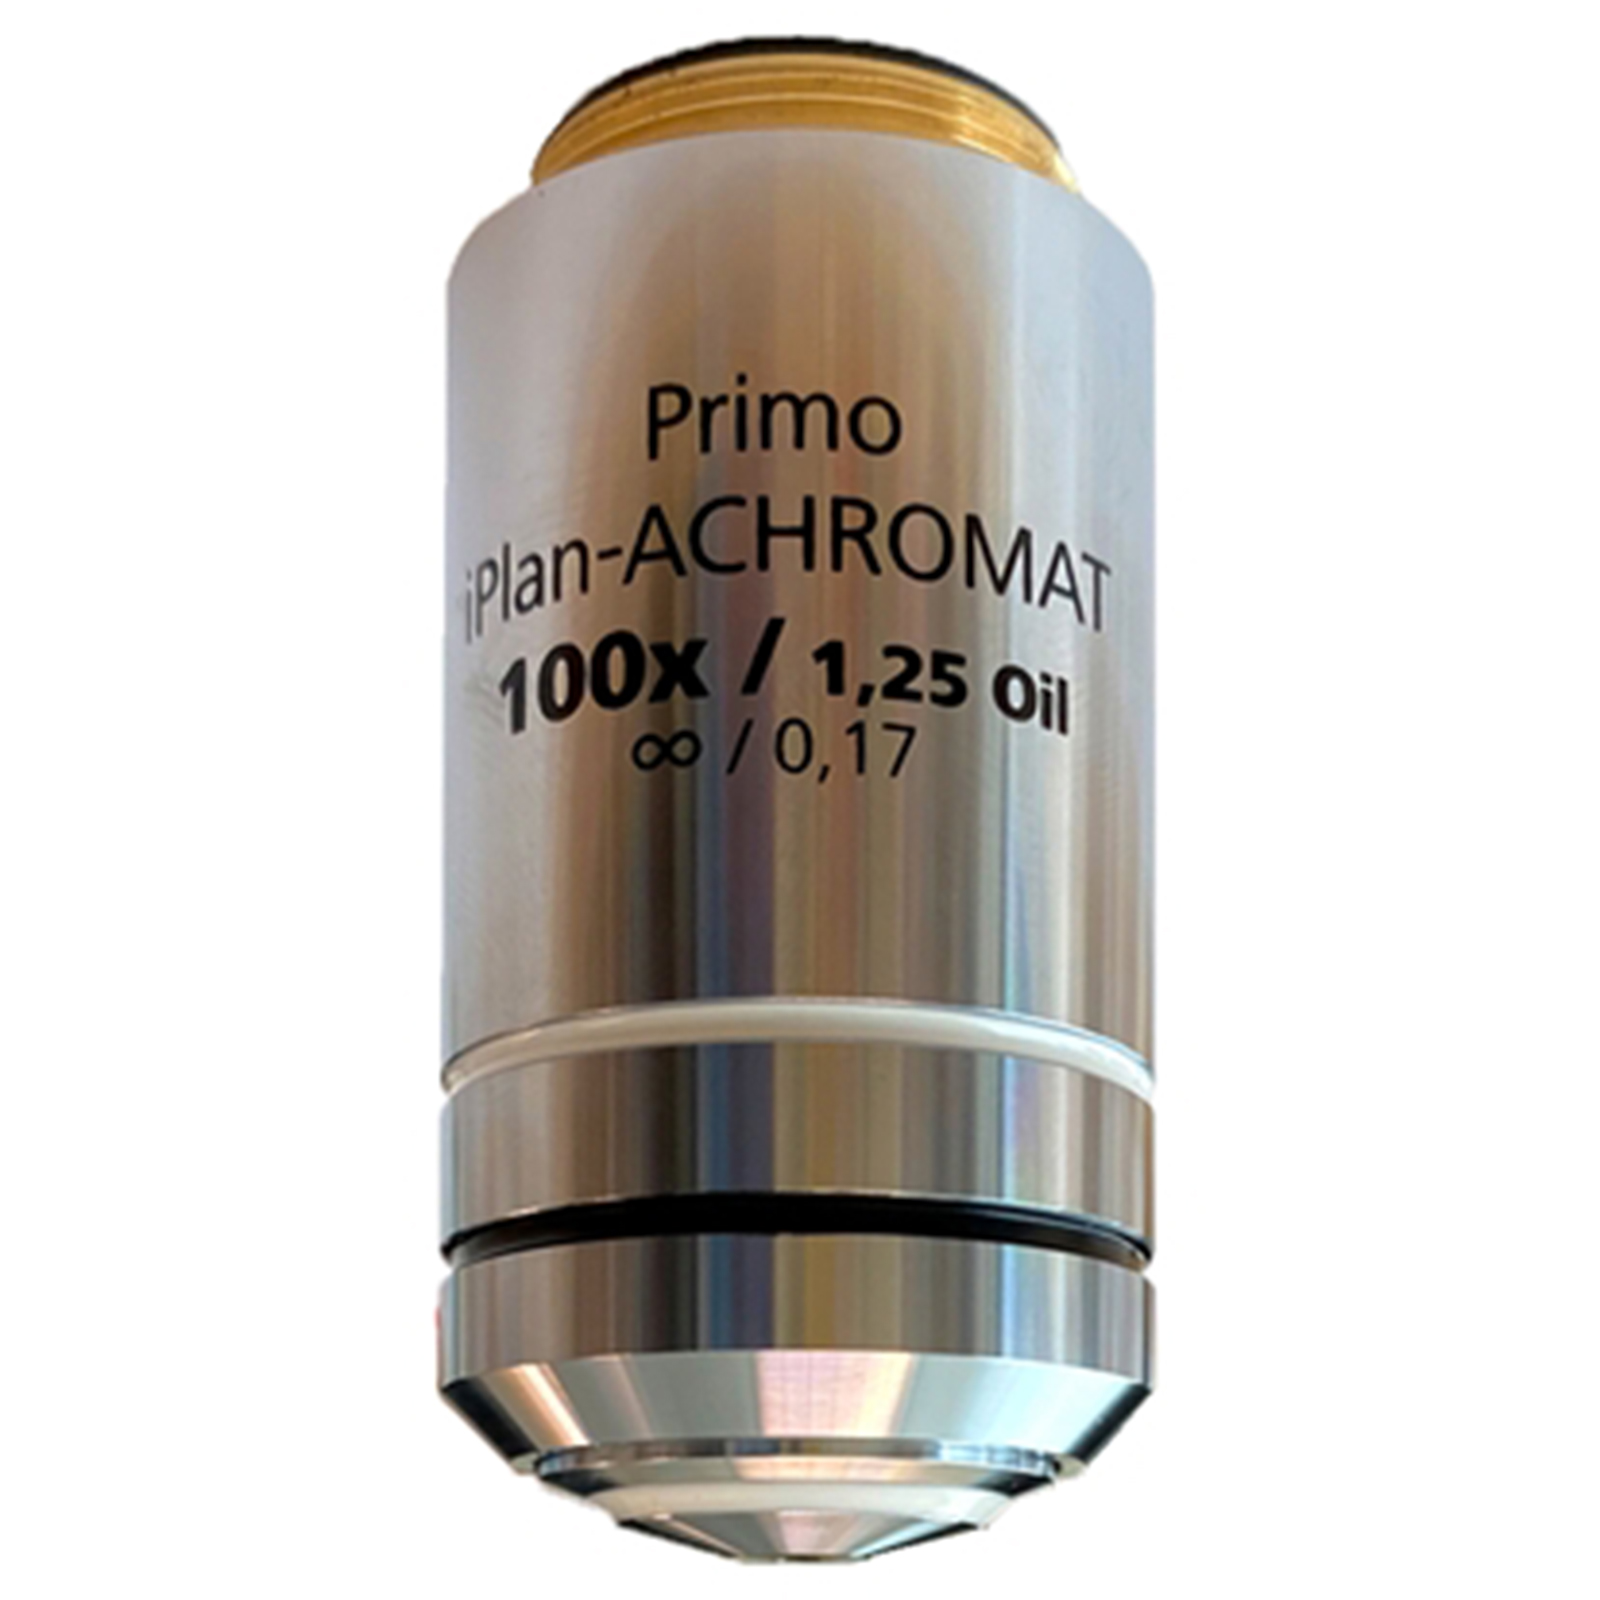 Image of Zeiss Primostar 1 Achromat 100x Objective